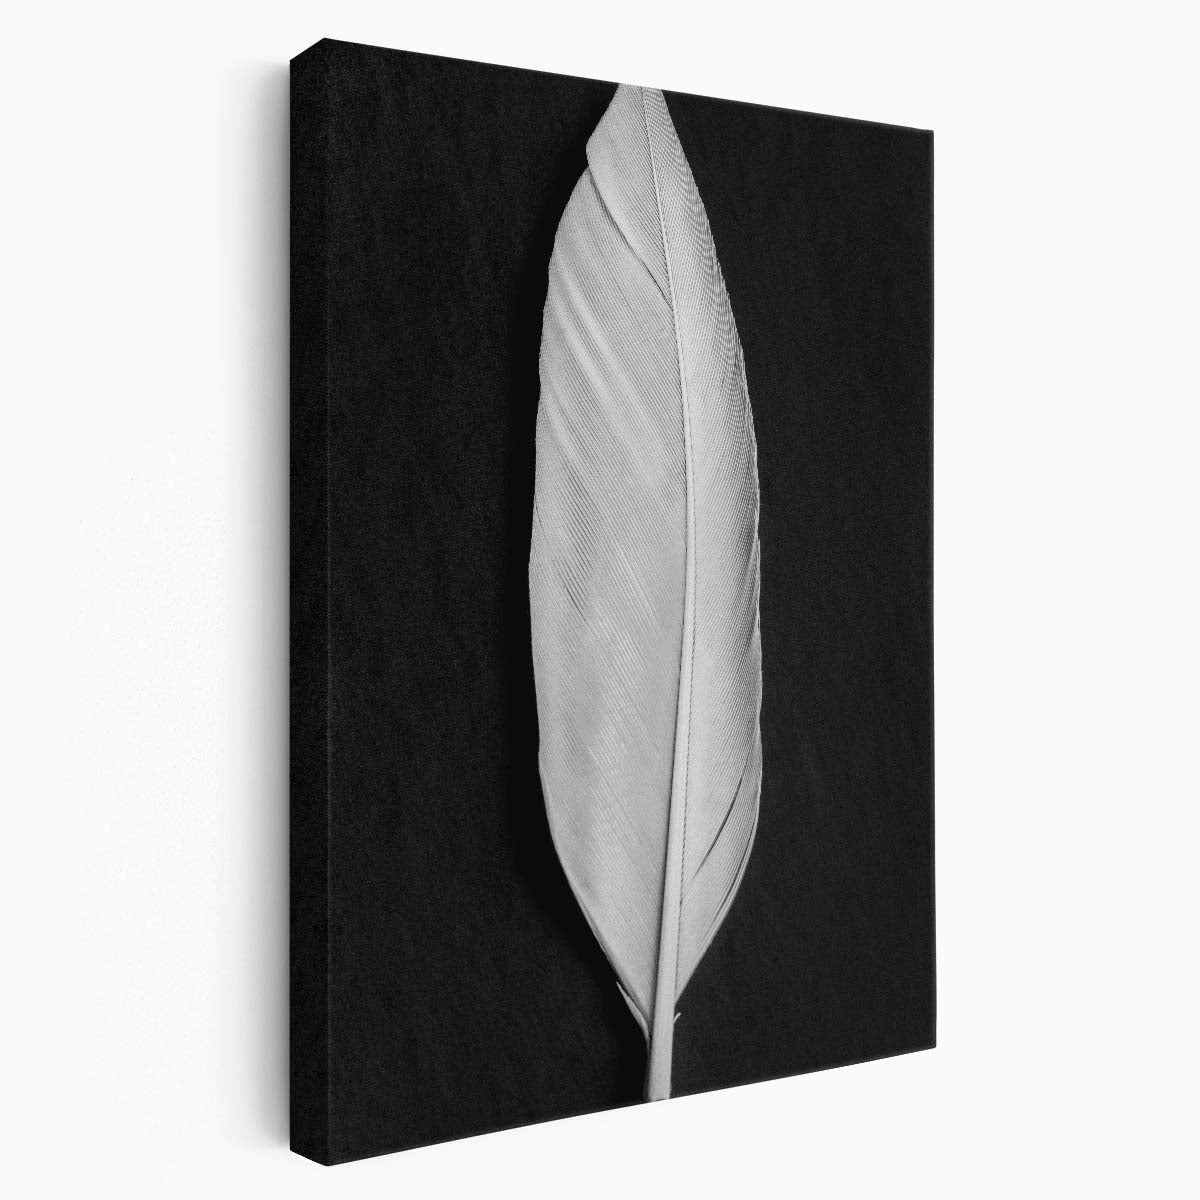 Minimalist Monochrome Bird Feather Still Life Photography Art by Luxuriance Designs, made in USA